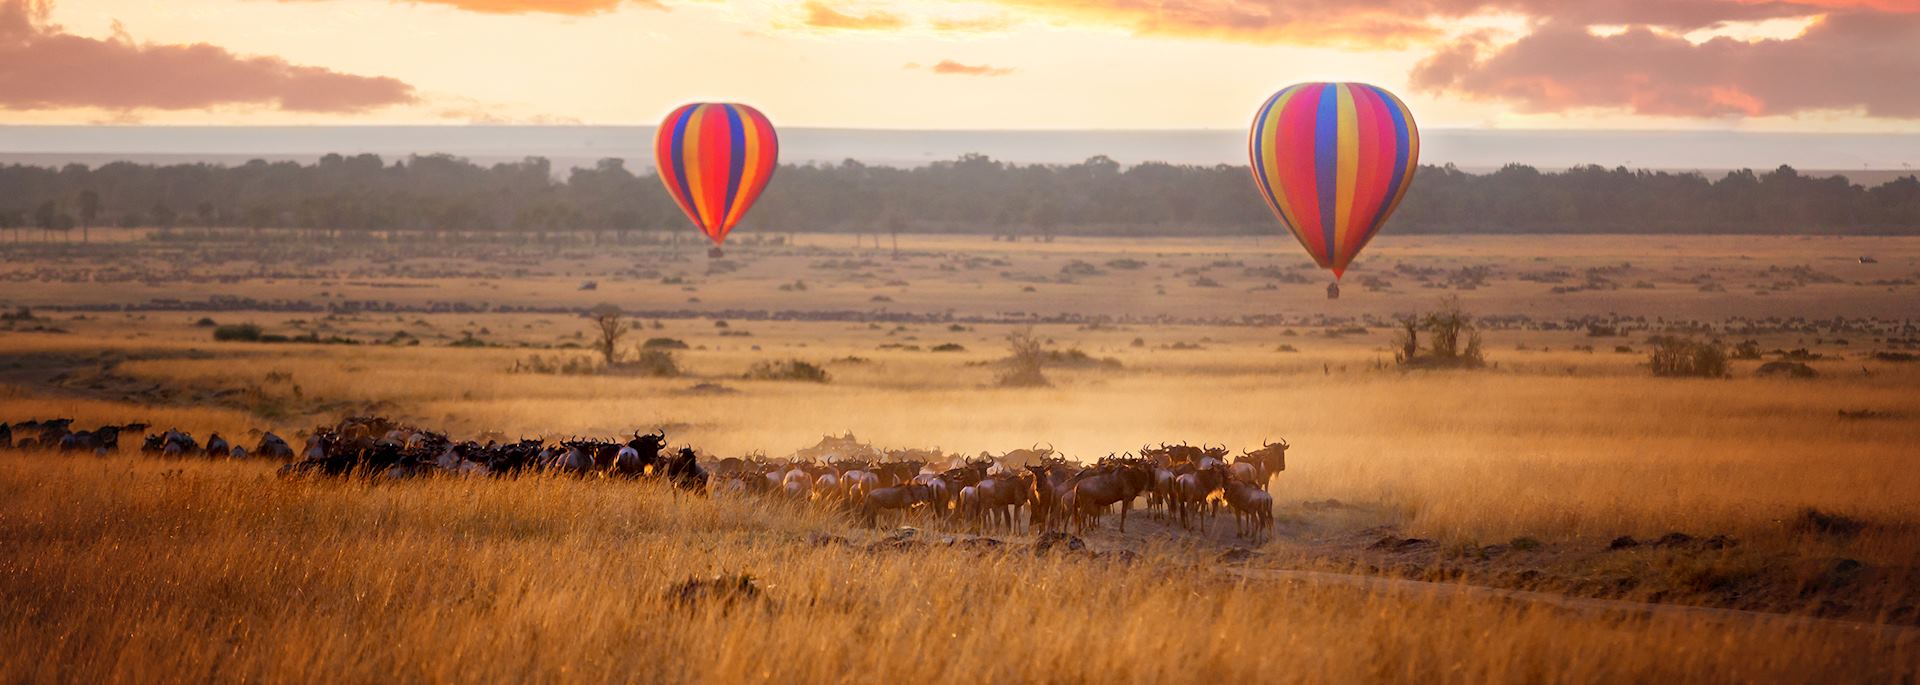 Balloon flight, Masai Mara National Reserve, Kenya